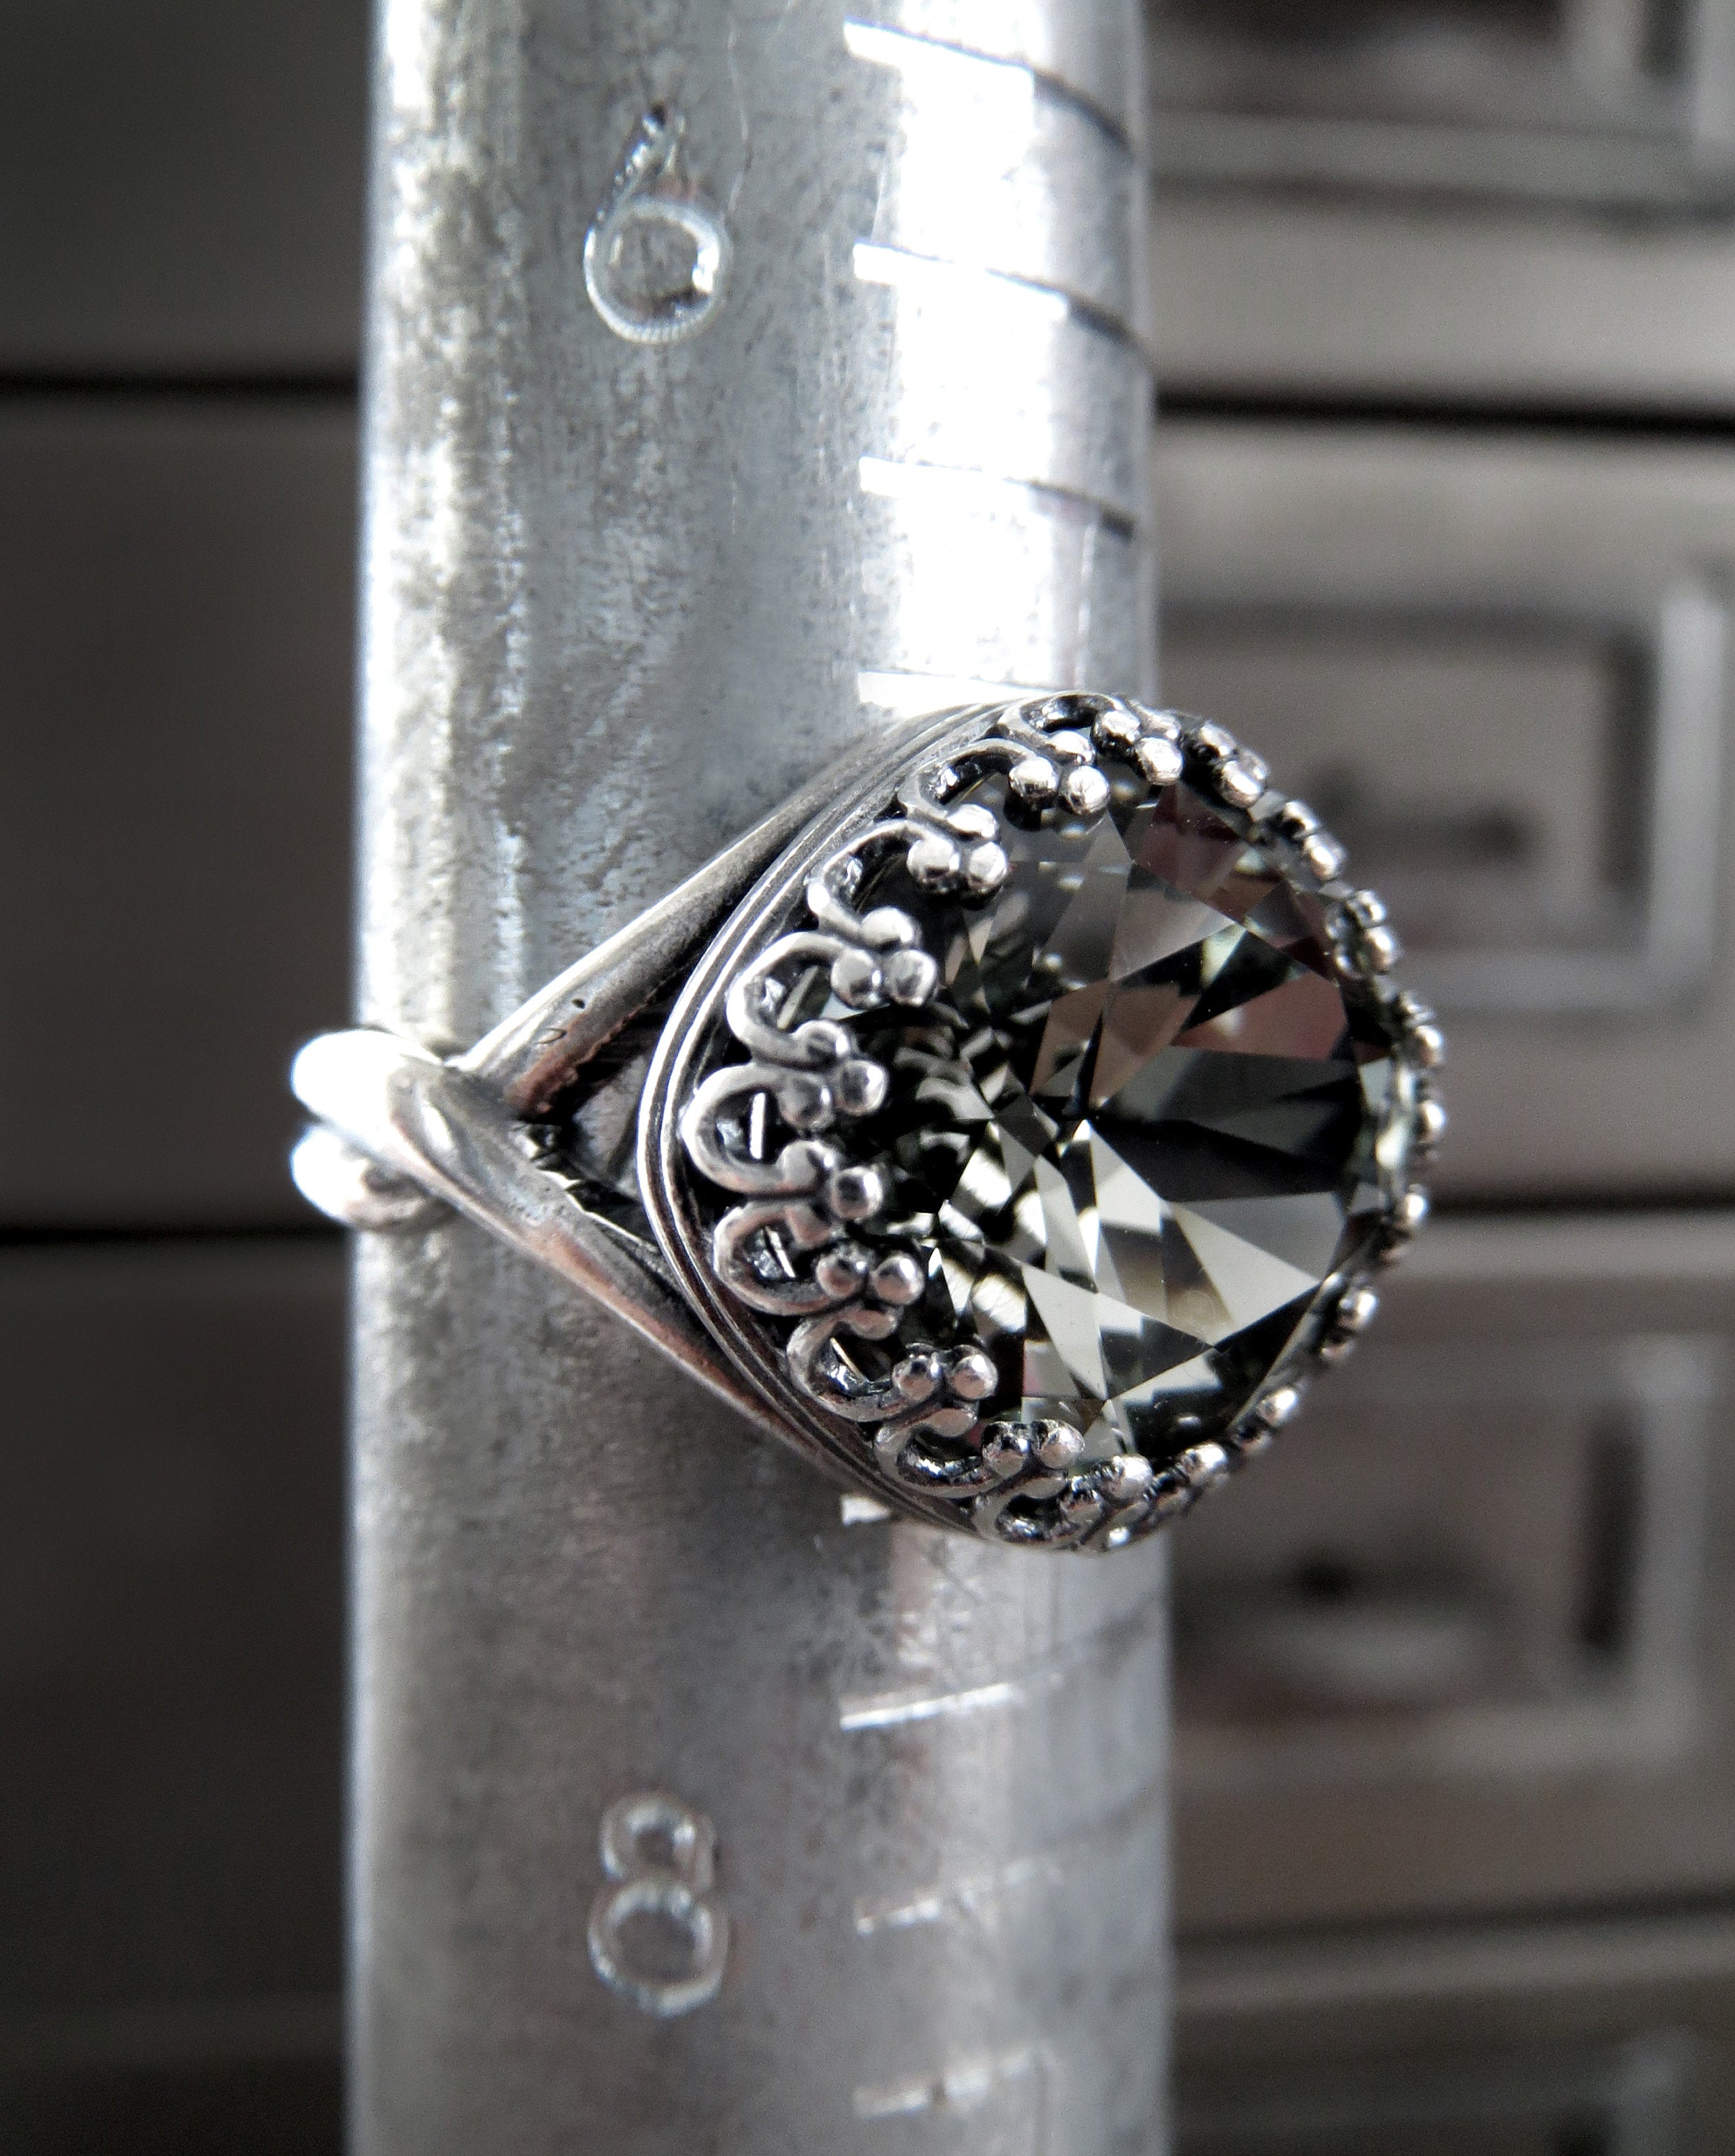 ETERNITY - Romantic Black Diamond Crystal Ring